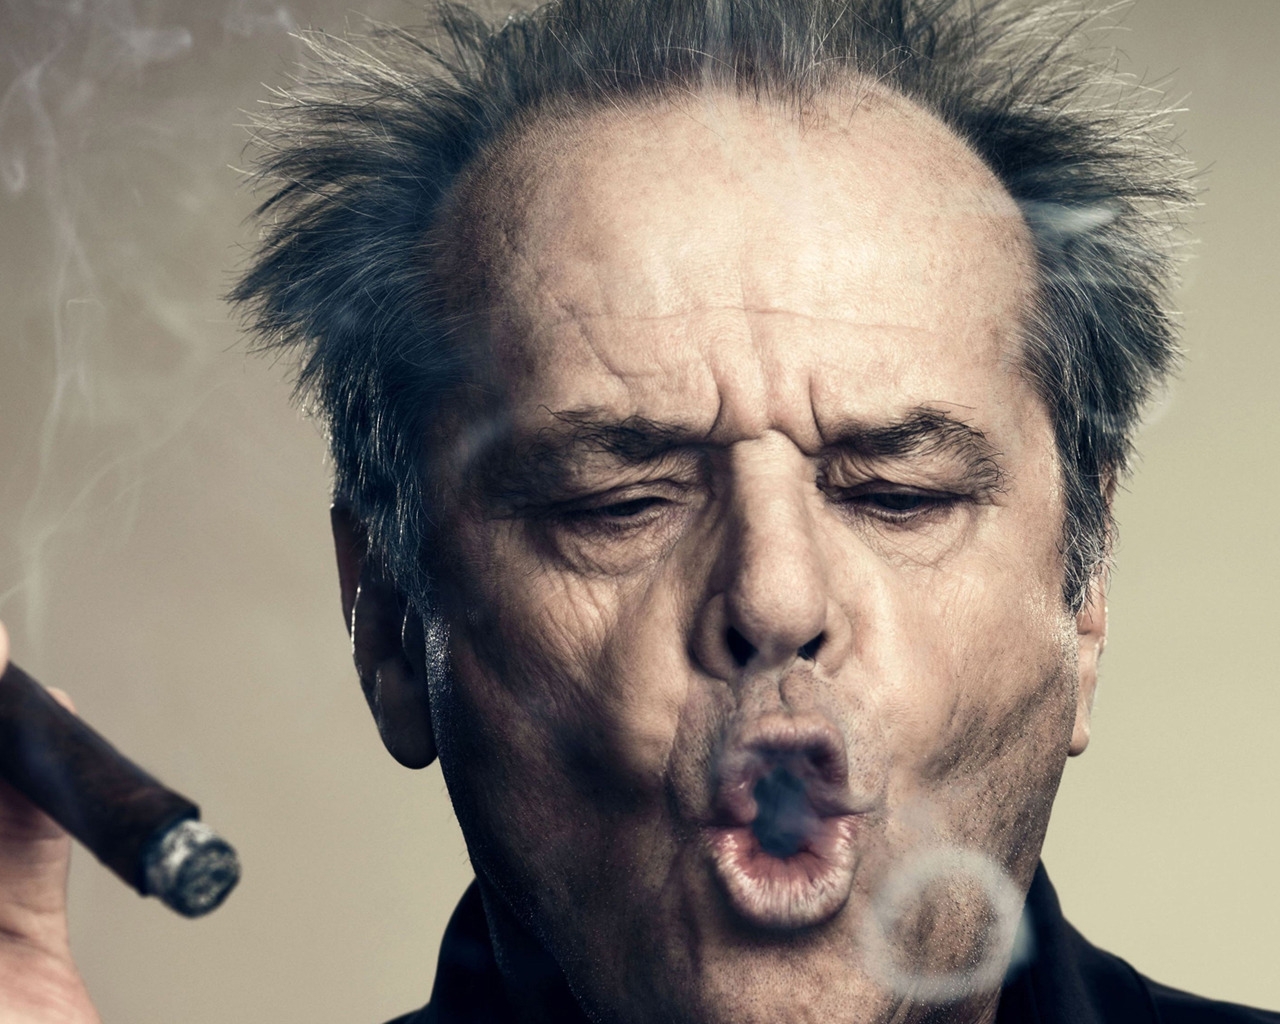 Jack Nicholson for 1280 x 1024 resolution